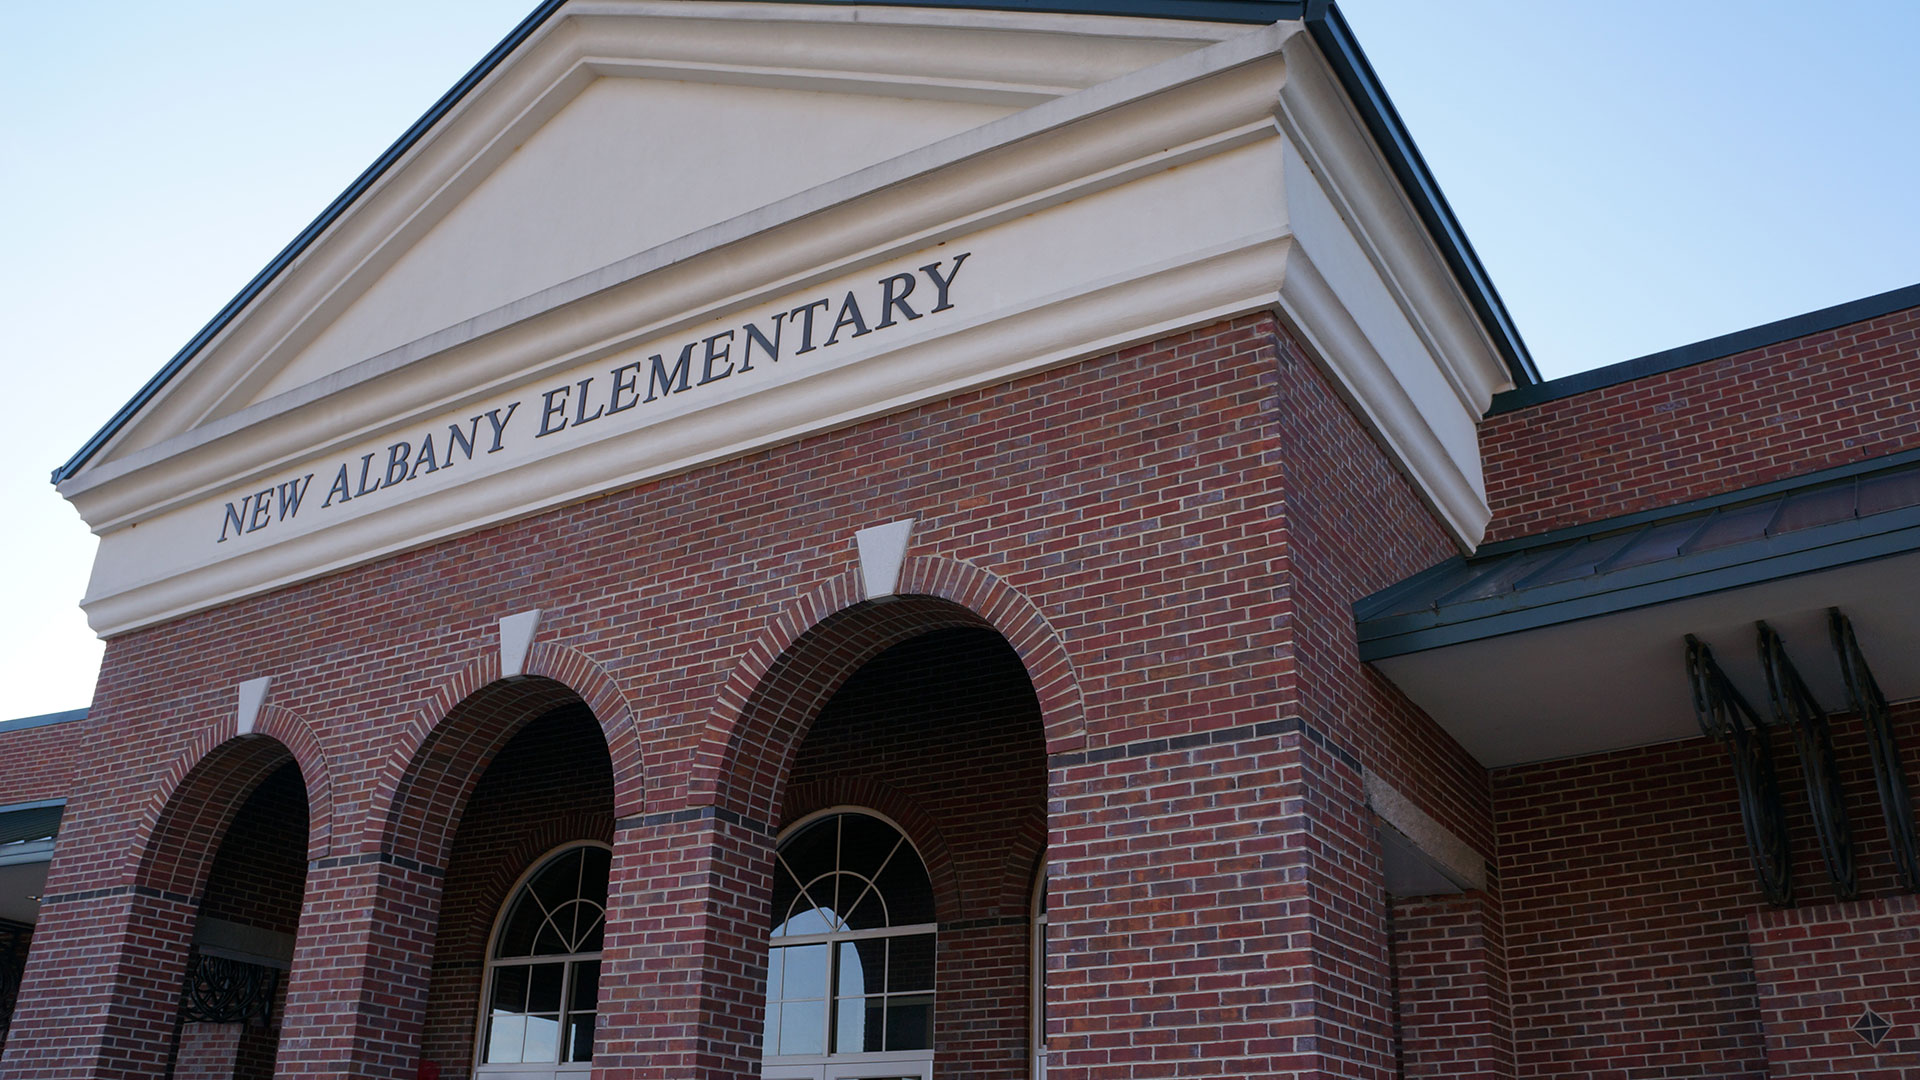 New Albany Elementary